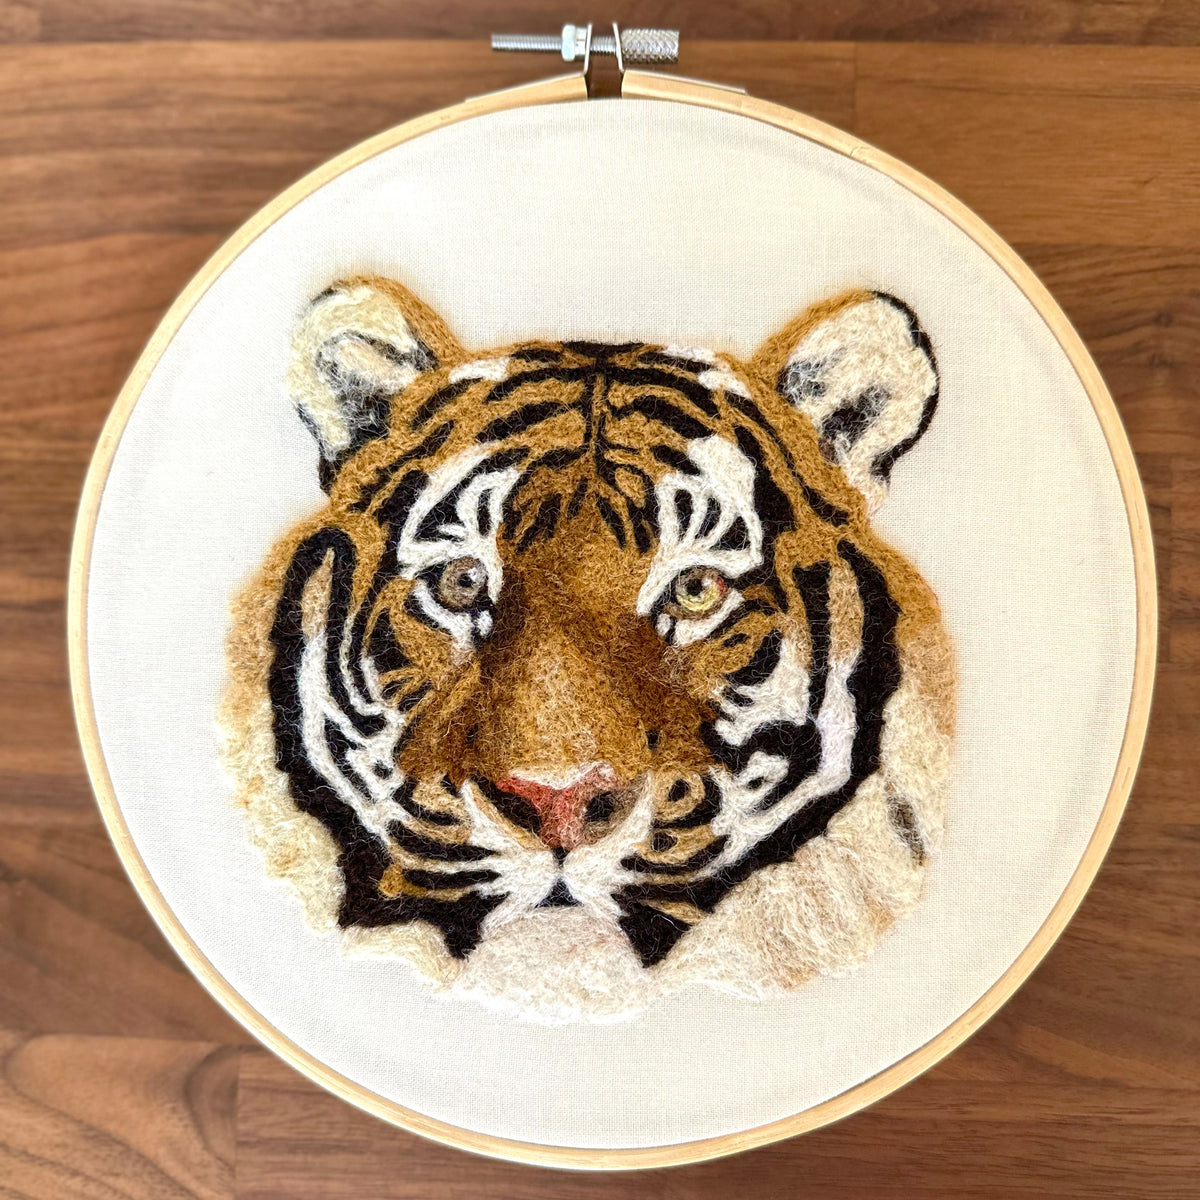 'Tiger' needlefelted portrait